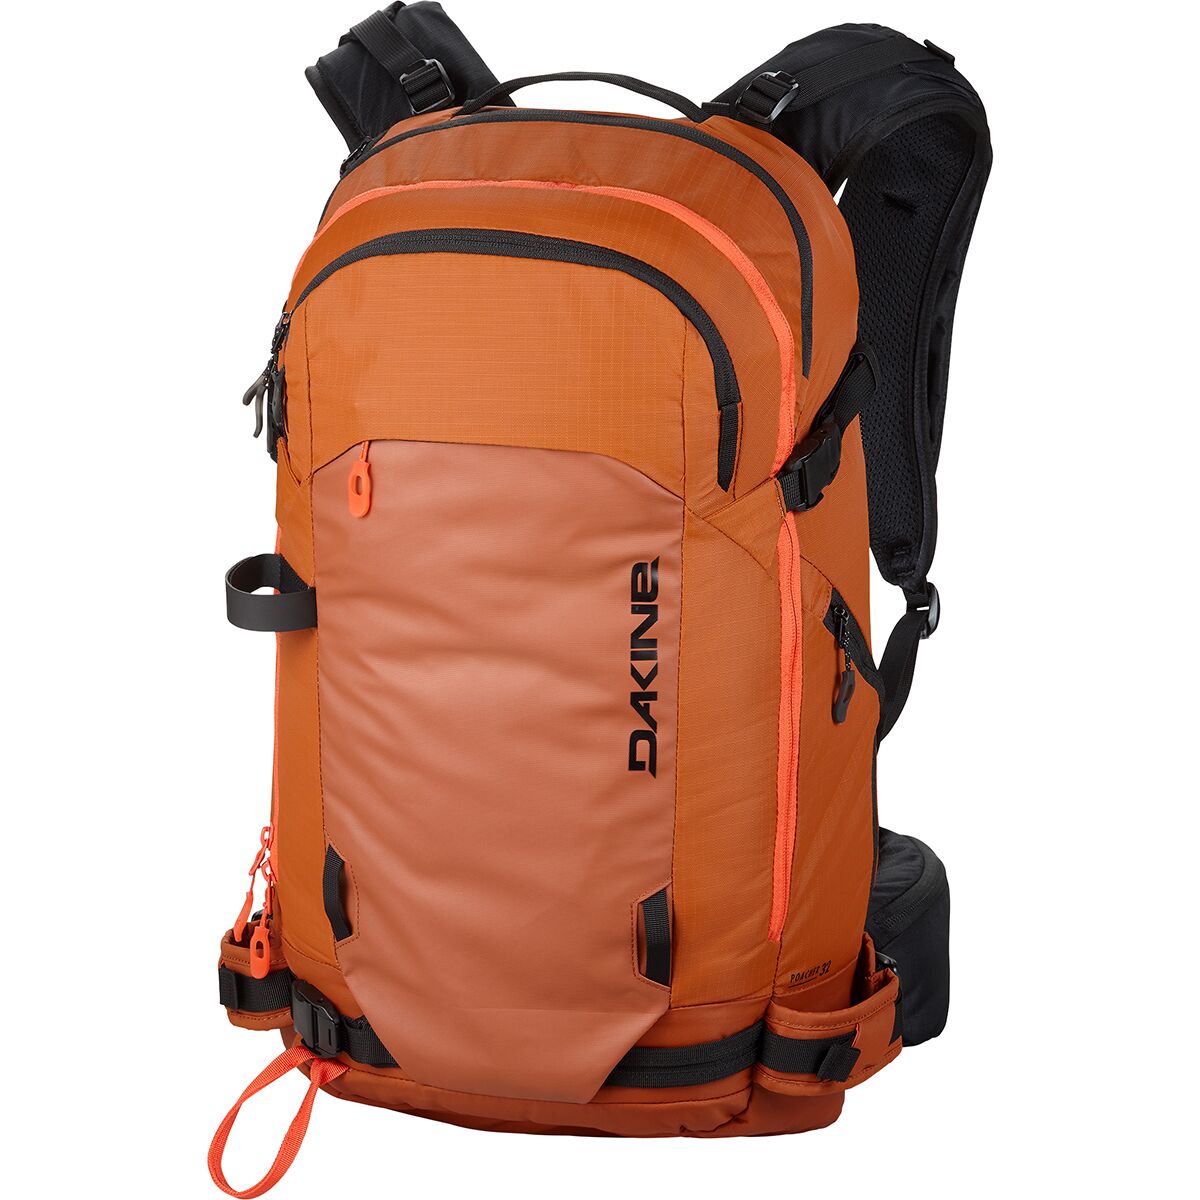 DAKINE Poacher 32L Backpack